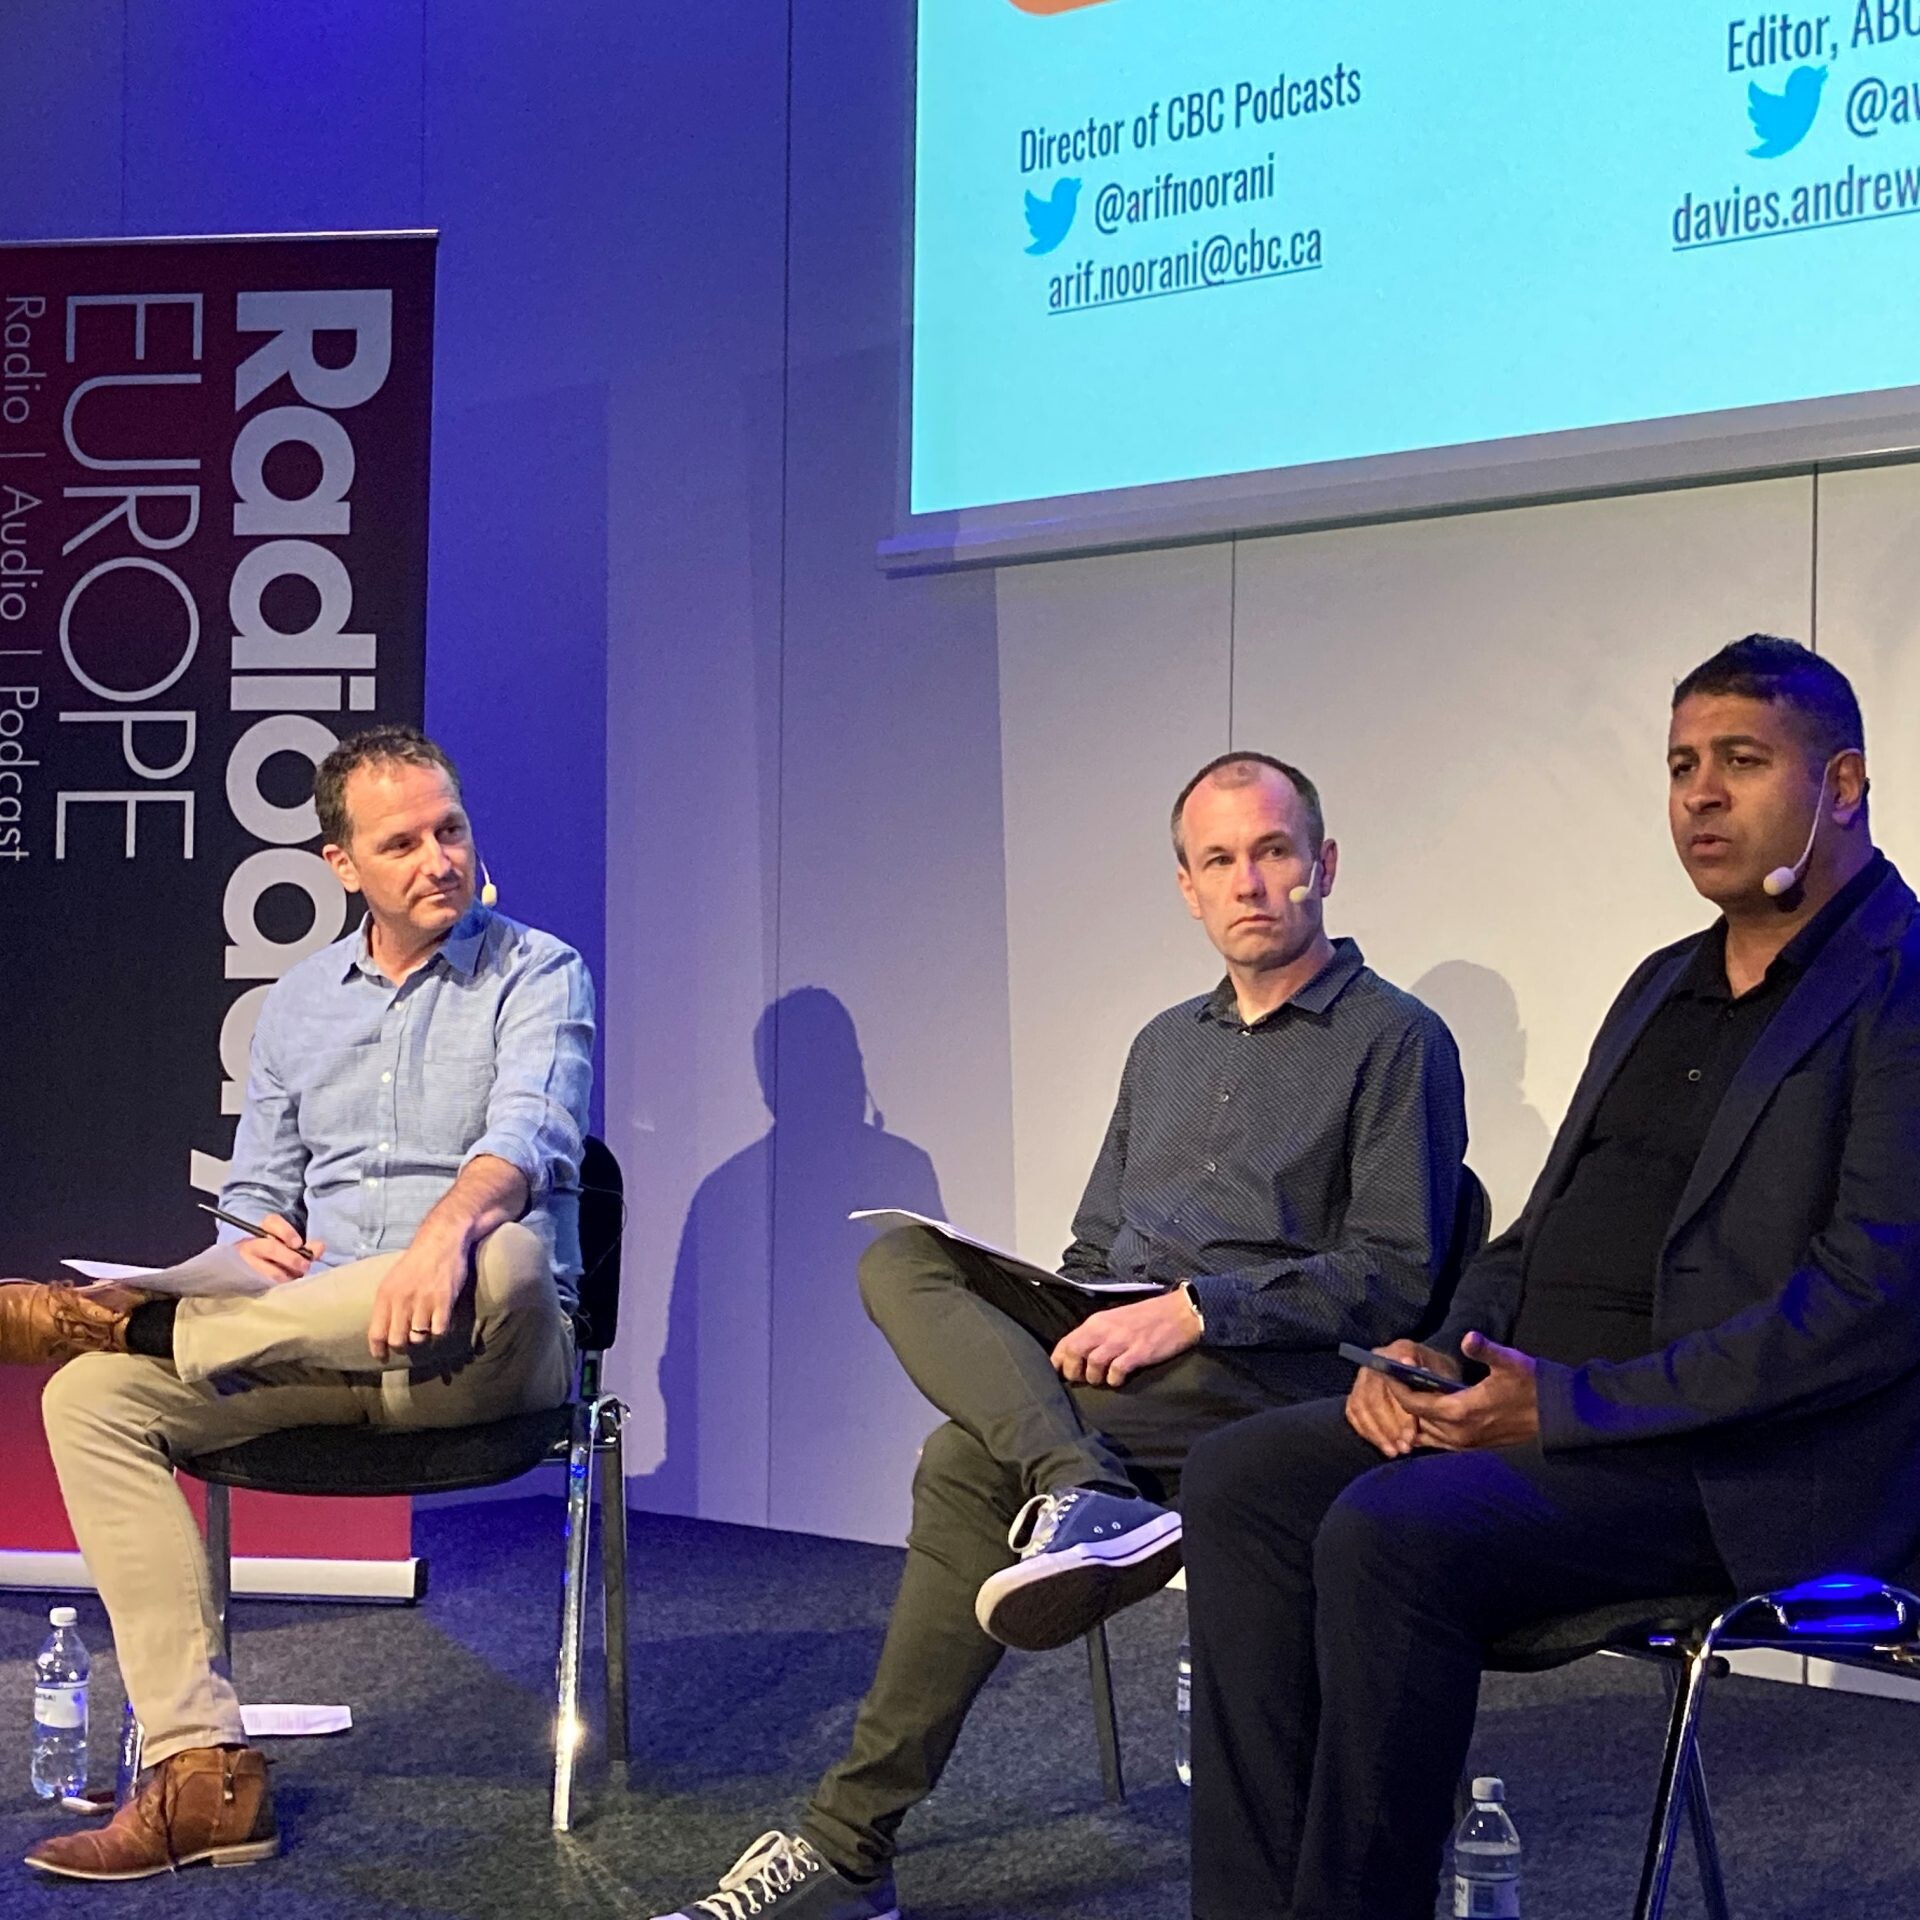 (From left to right) Tim Watkin, Andrew Davies, and Arif Noorani speaking at Radiodays Europe in May 2022.